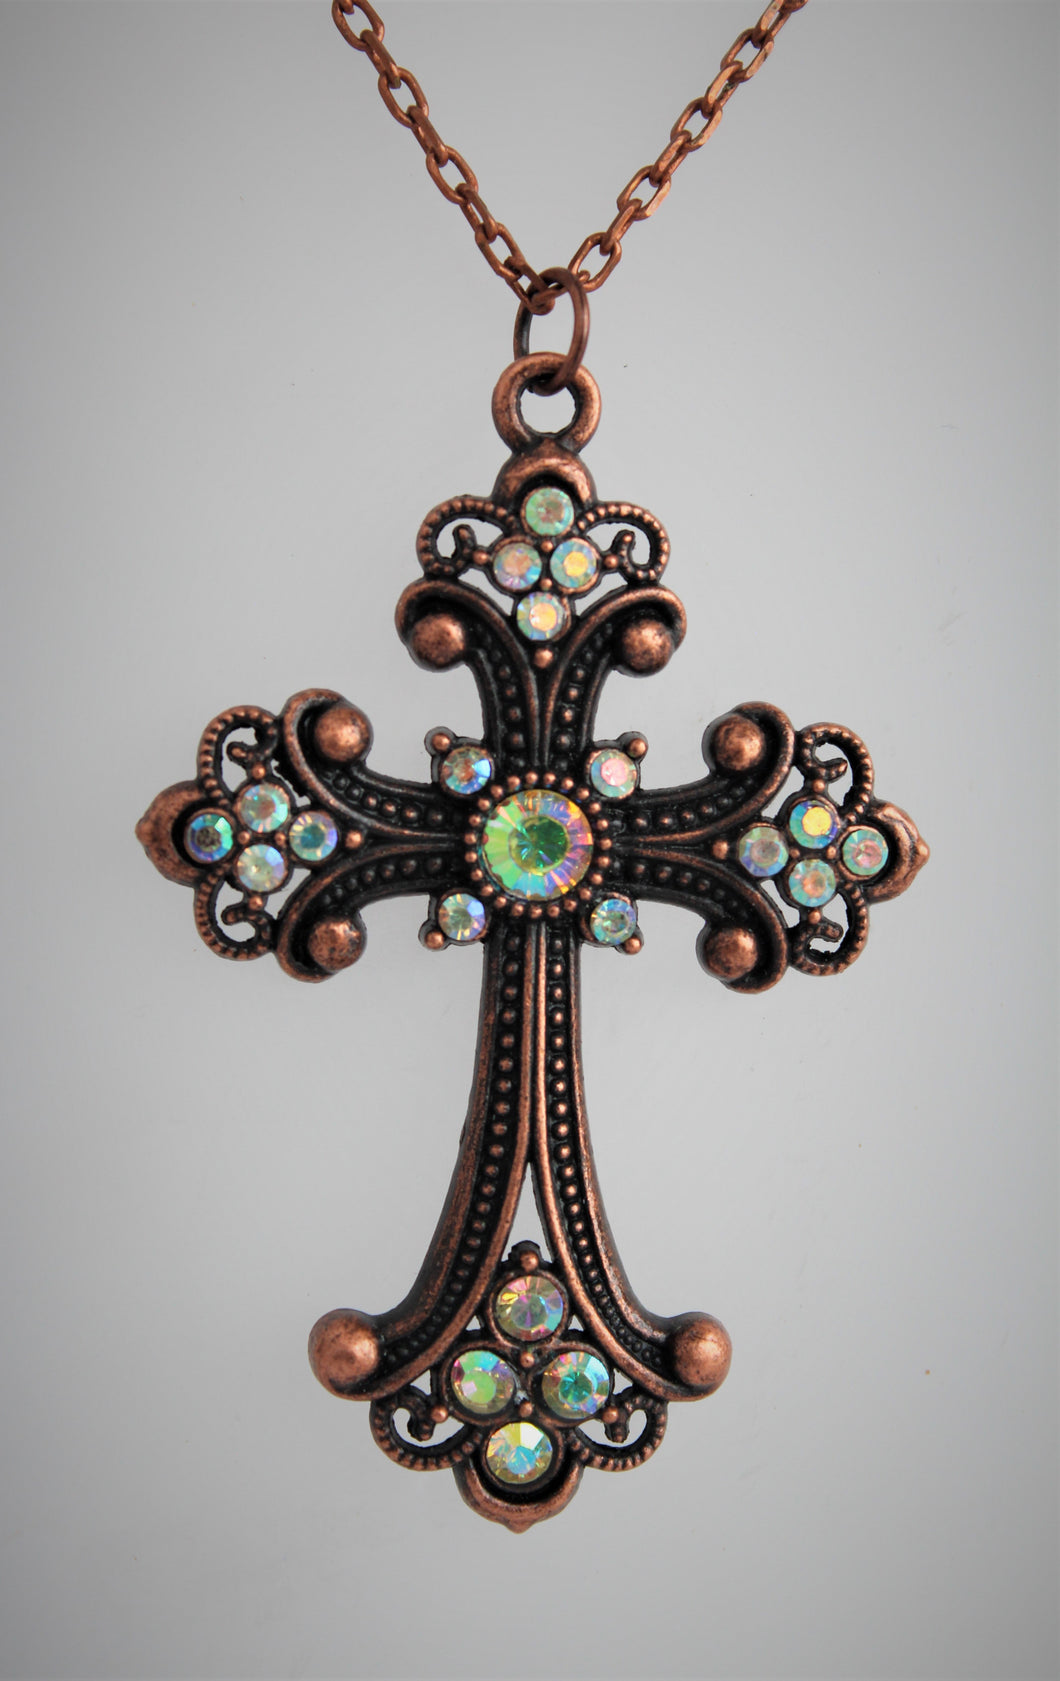 Large Gothic Cross Pendant Necklace